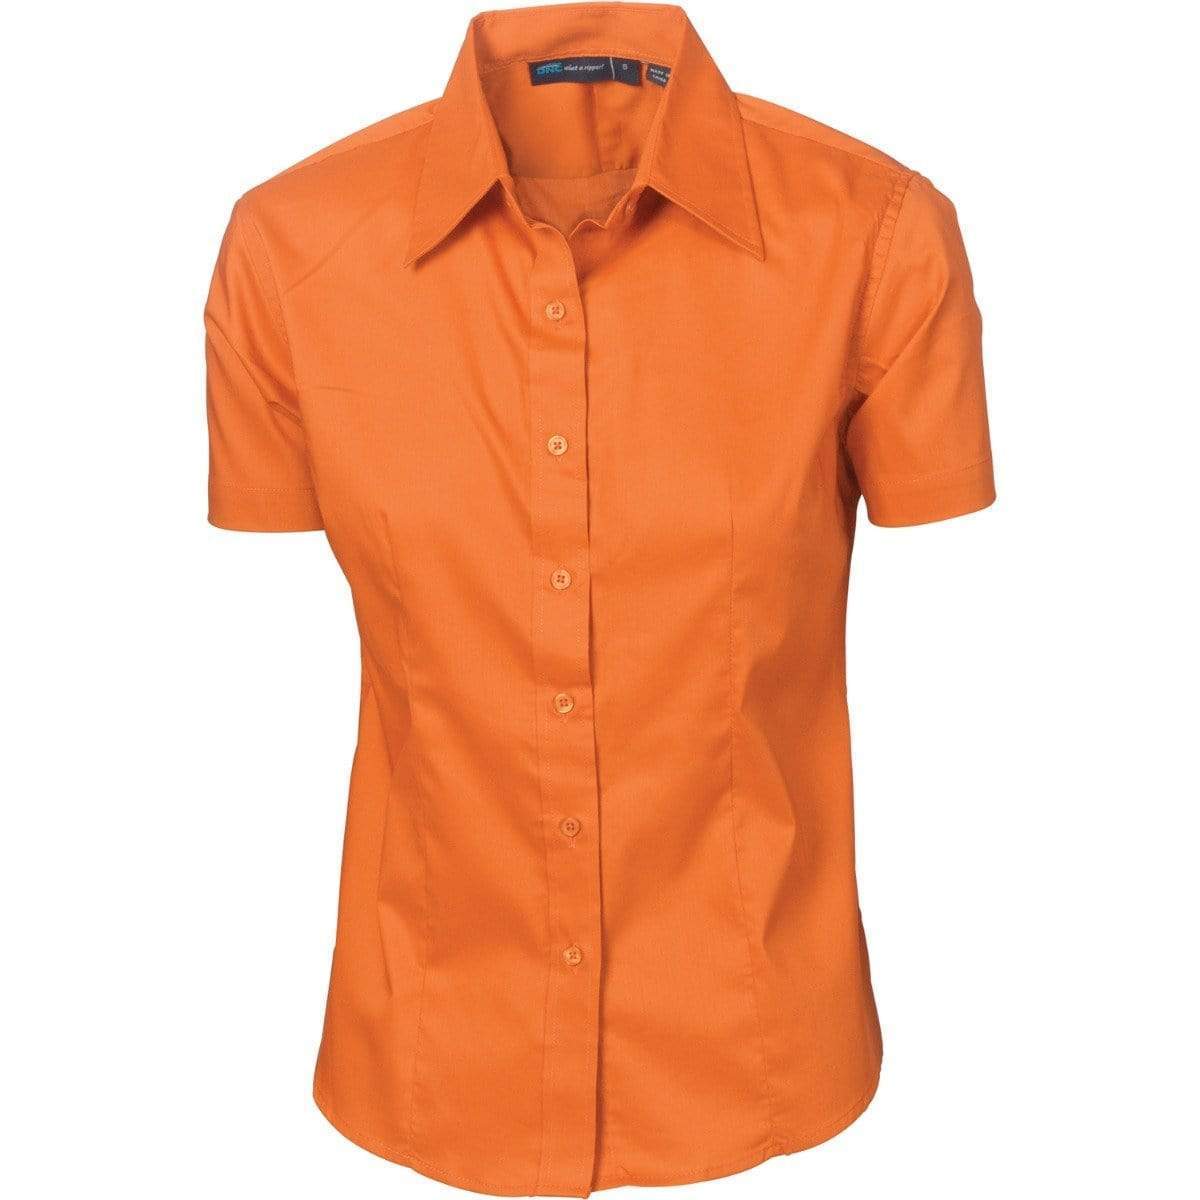 Dnc Workwear Ladies Premier Stretch Poplin Short Sleeve Business Shirt - 4231 Corporate Wear DNC Workwear Rust 6 